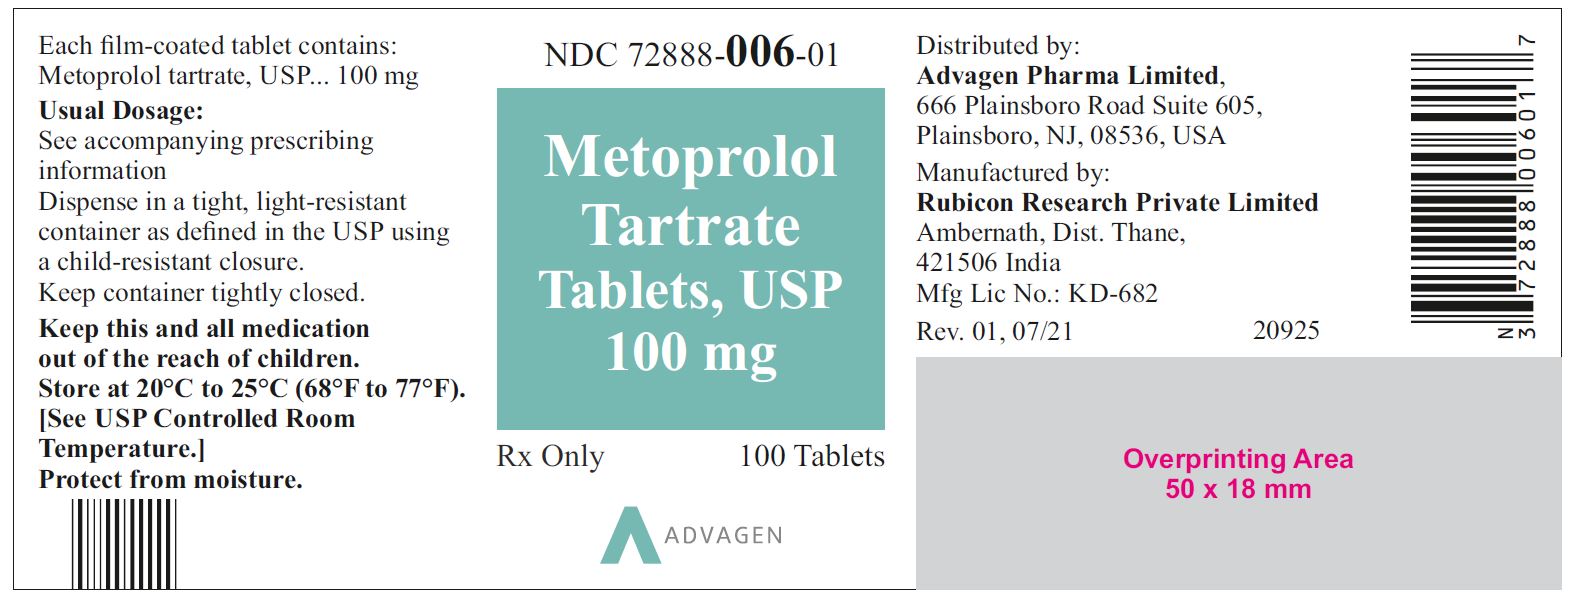 NDC 72888-006-01 - Metoprolol Tartrate Tablets, USP 100 mg - 100 Tablets